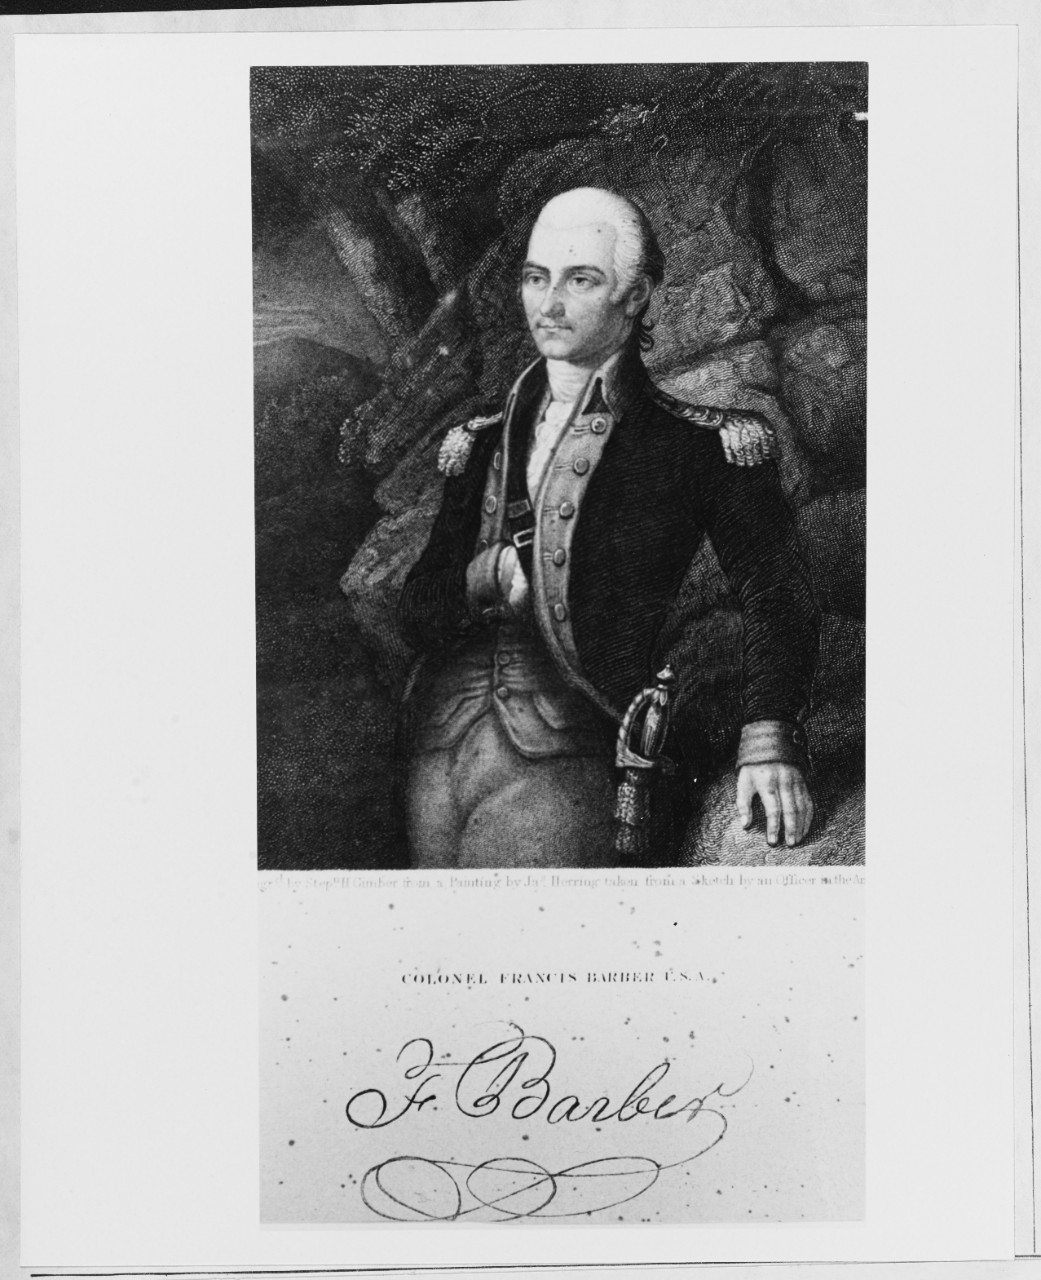 Colonel Francis Barber, USA